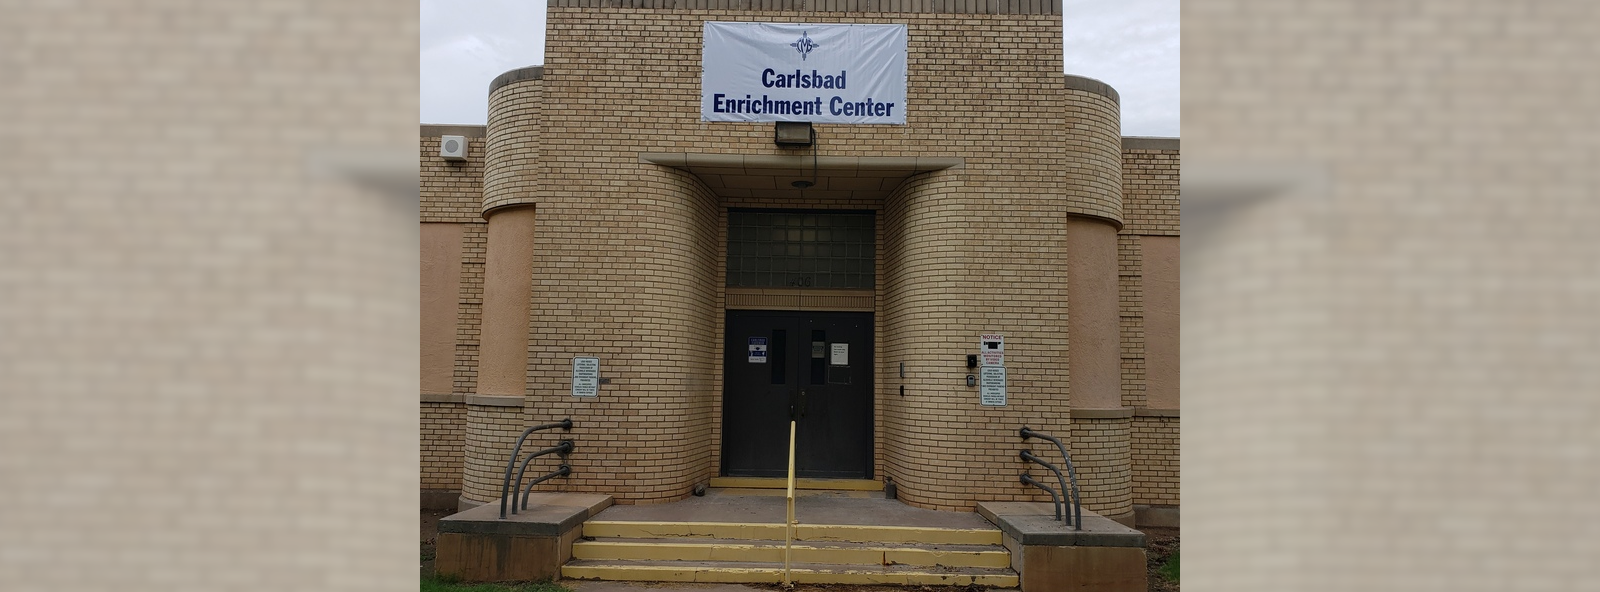 Carlsbad Enrichment Center Building